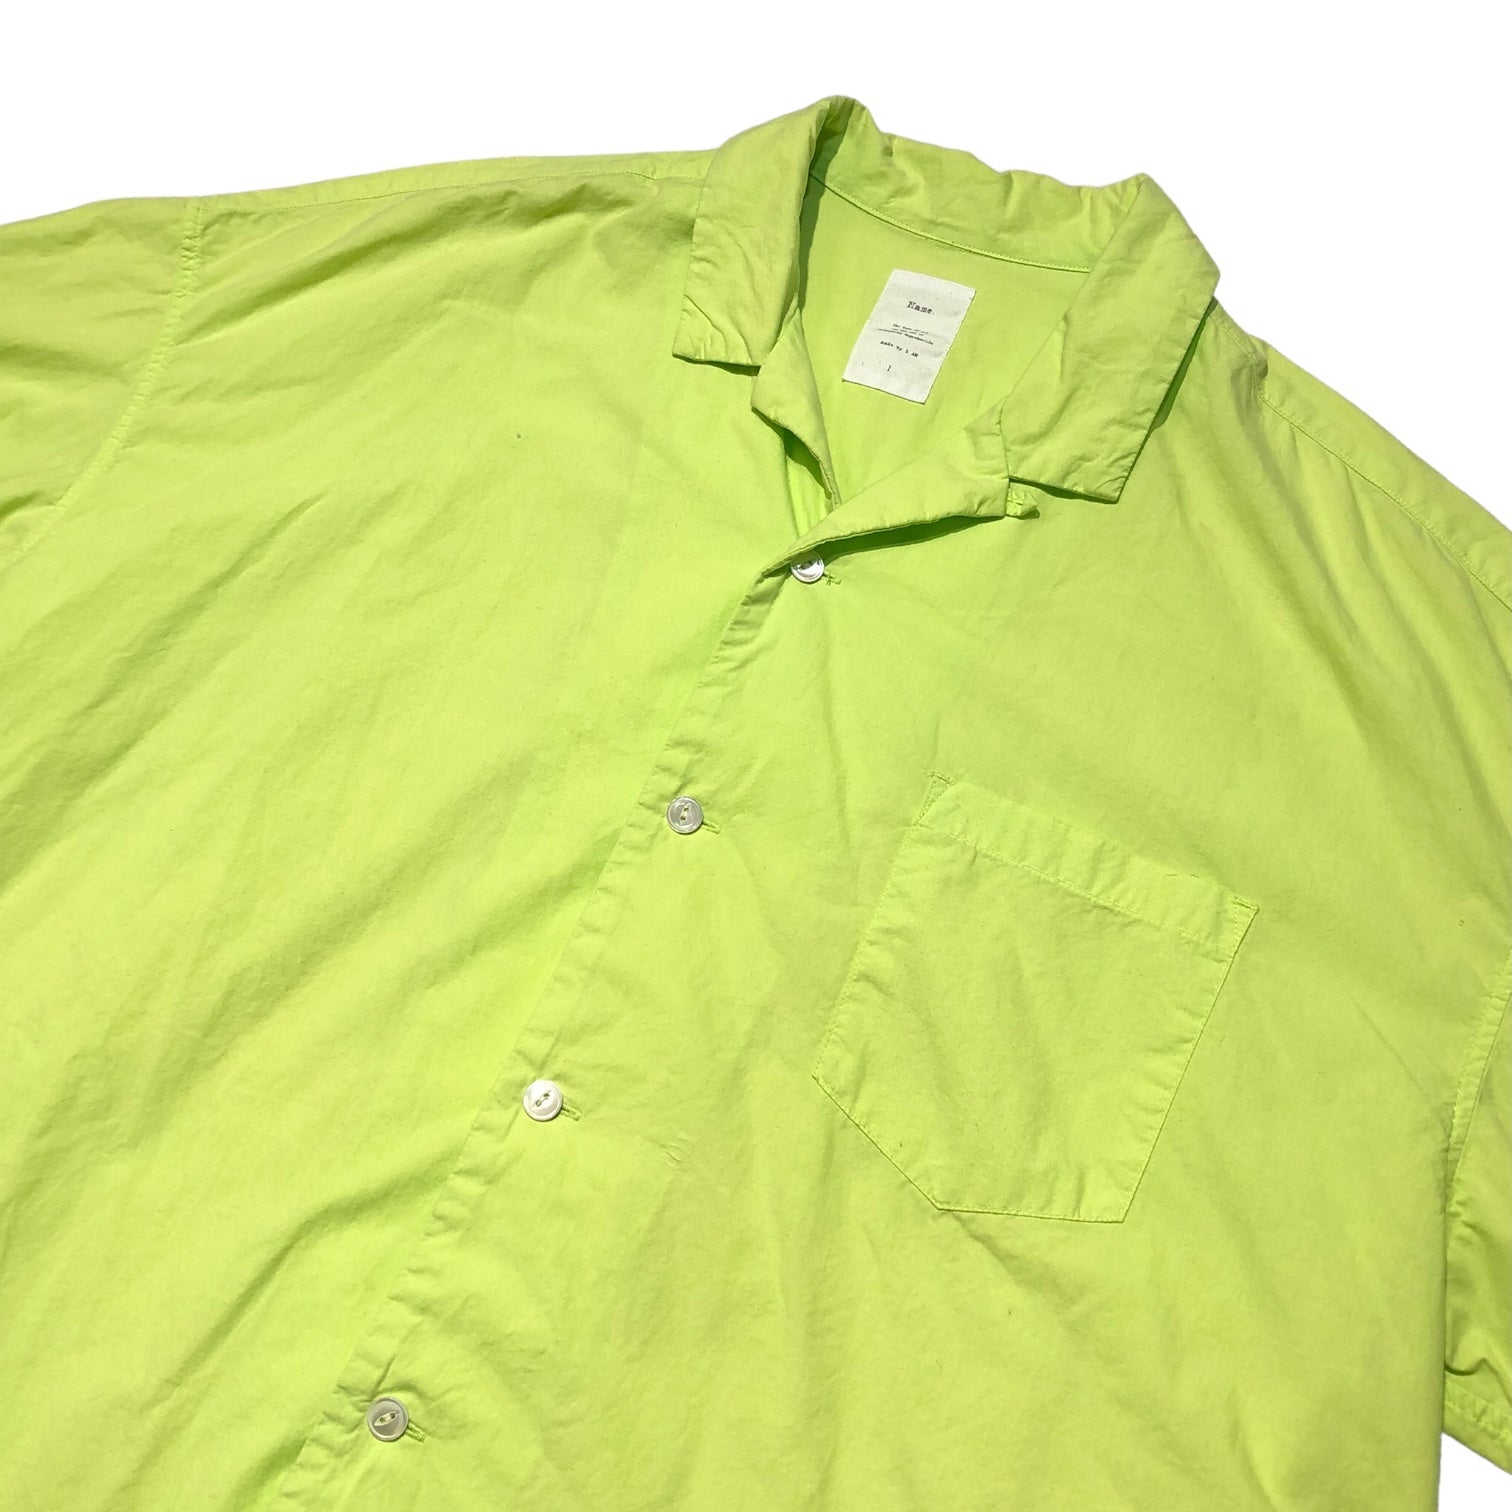 Name.(ネーム) 18SS Oversized open collar S/S shirt オーバーサイズ オープンカラー 半袖 シャツ NMSH-18SS-002 1(S程度) ライトグリーン